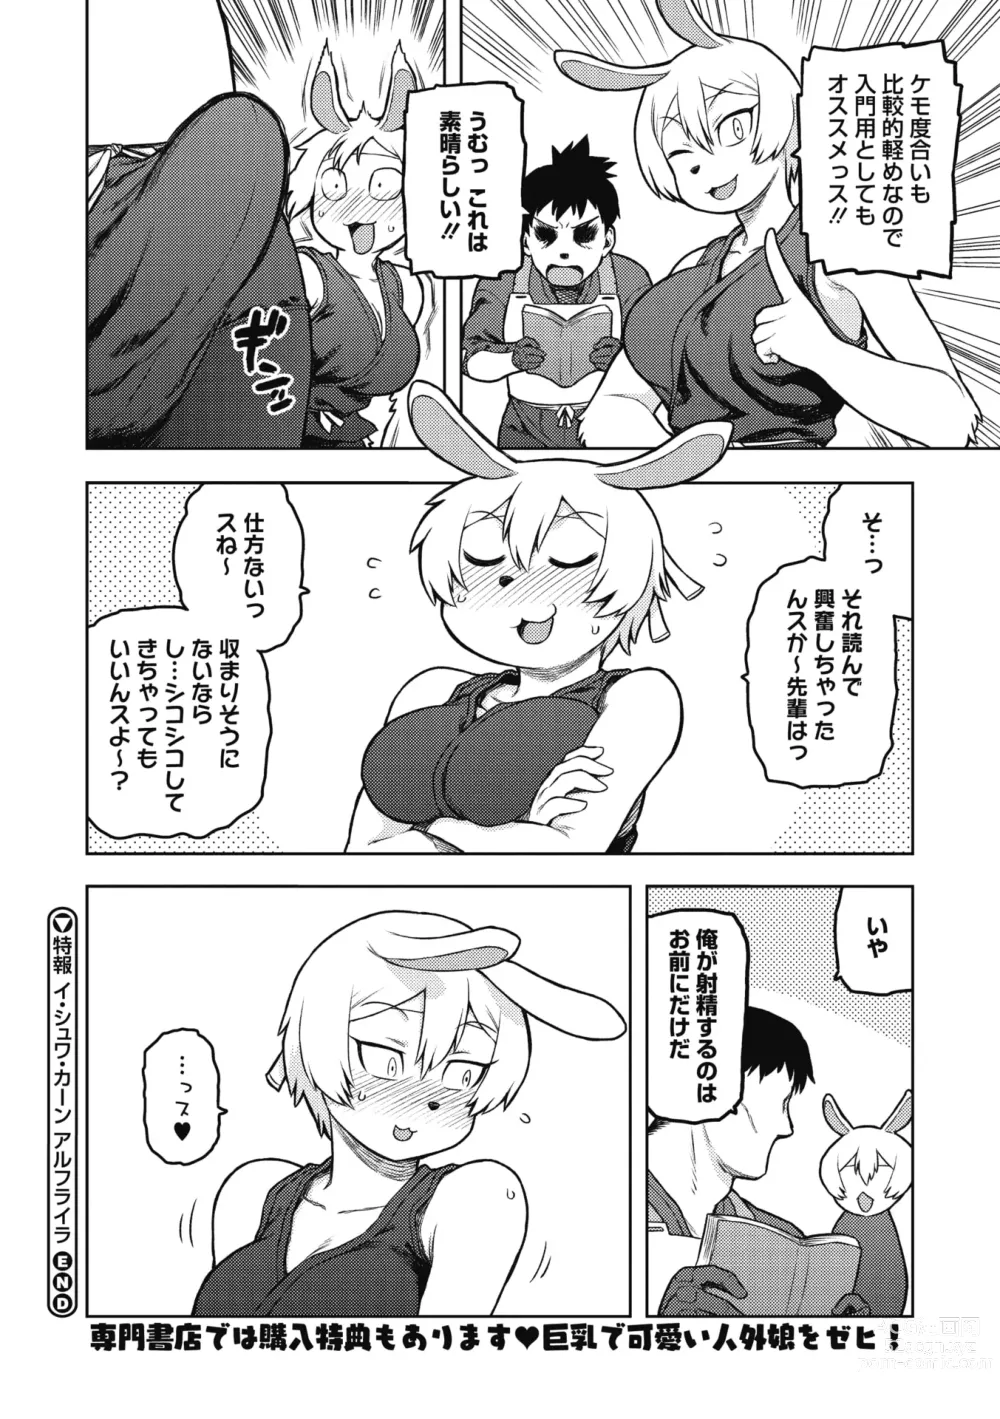 Page 147 of manga COMIC GAIRA Vol. 10